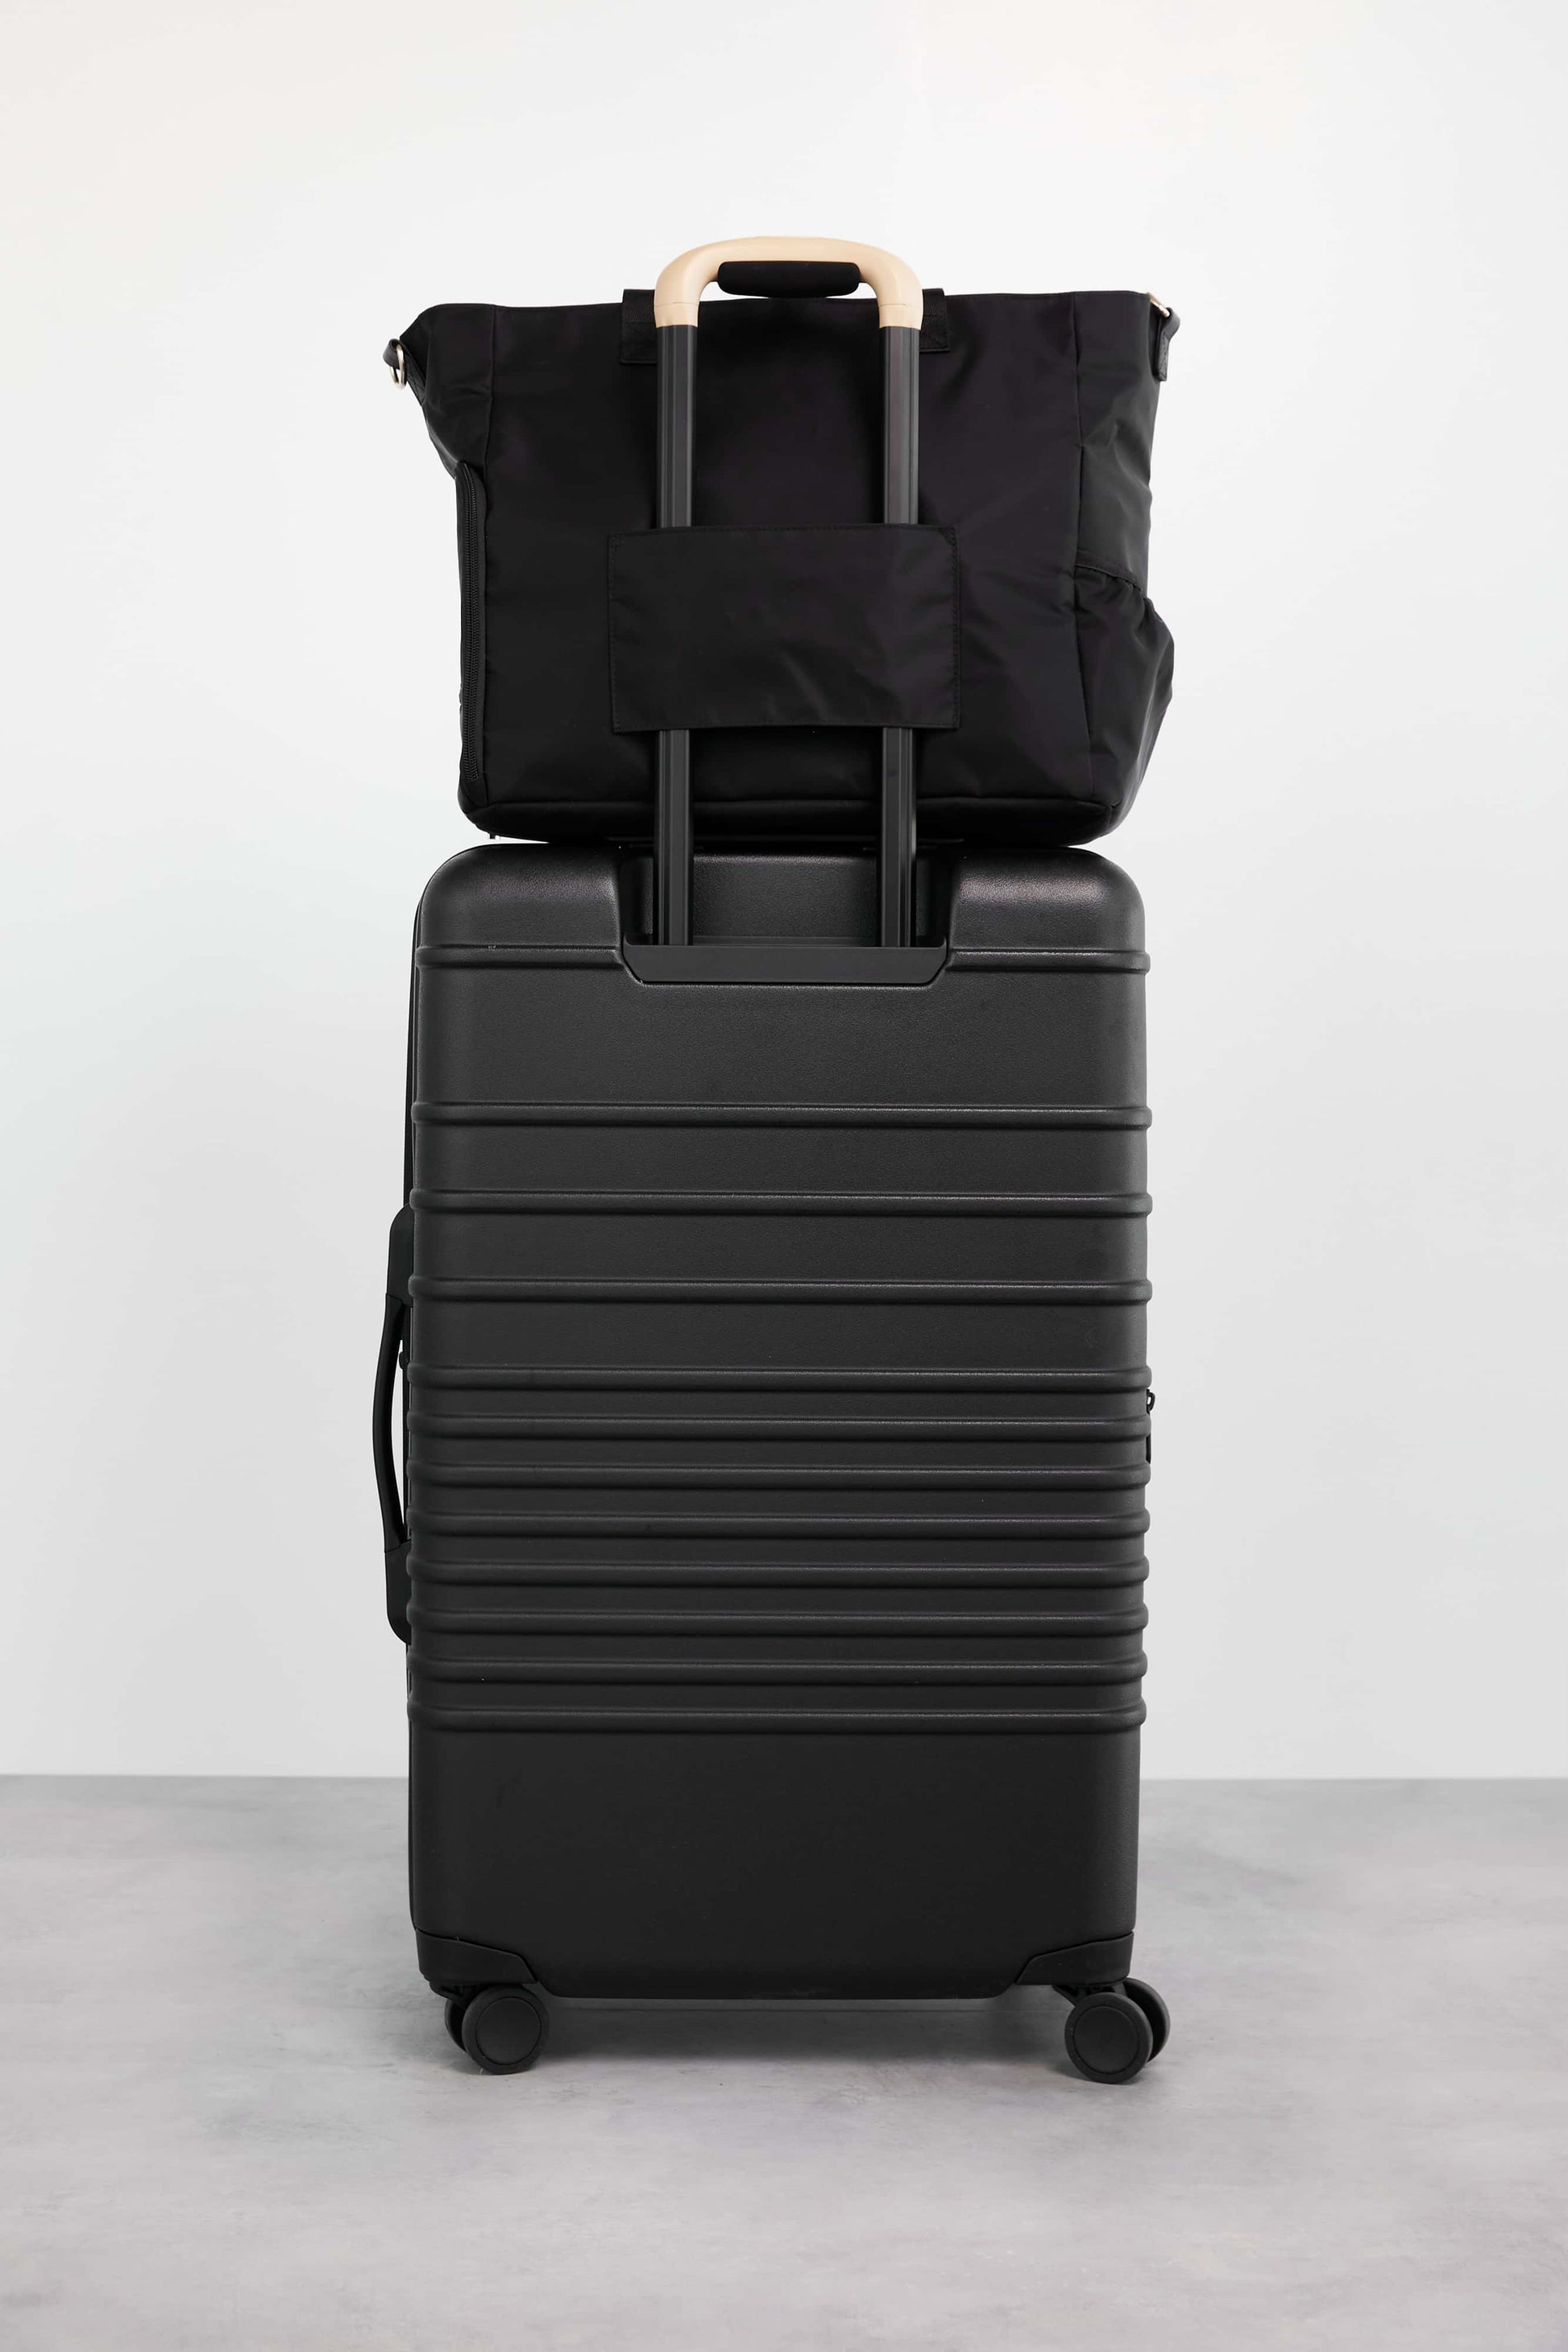 Pumping Bag Black Back Trolley Sleeve Luggage Stack